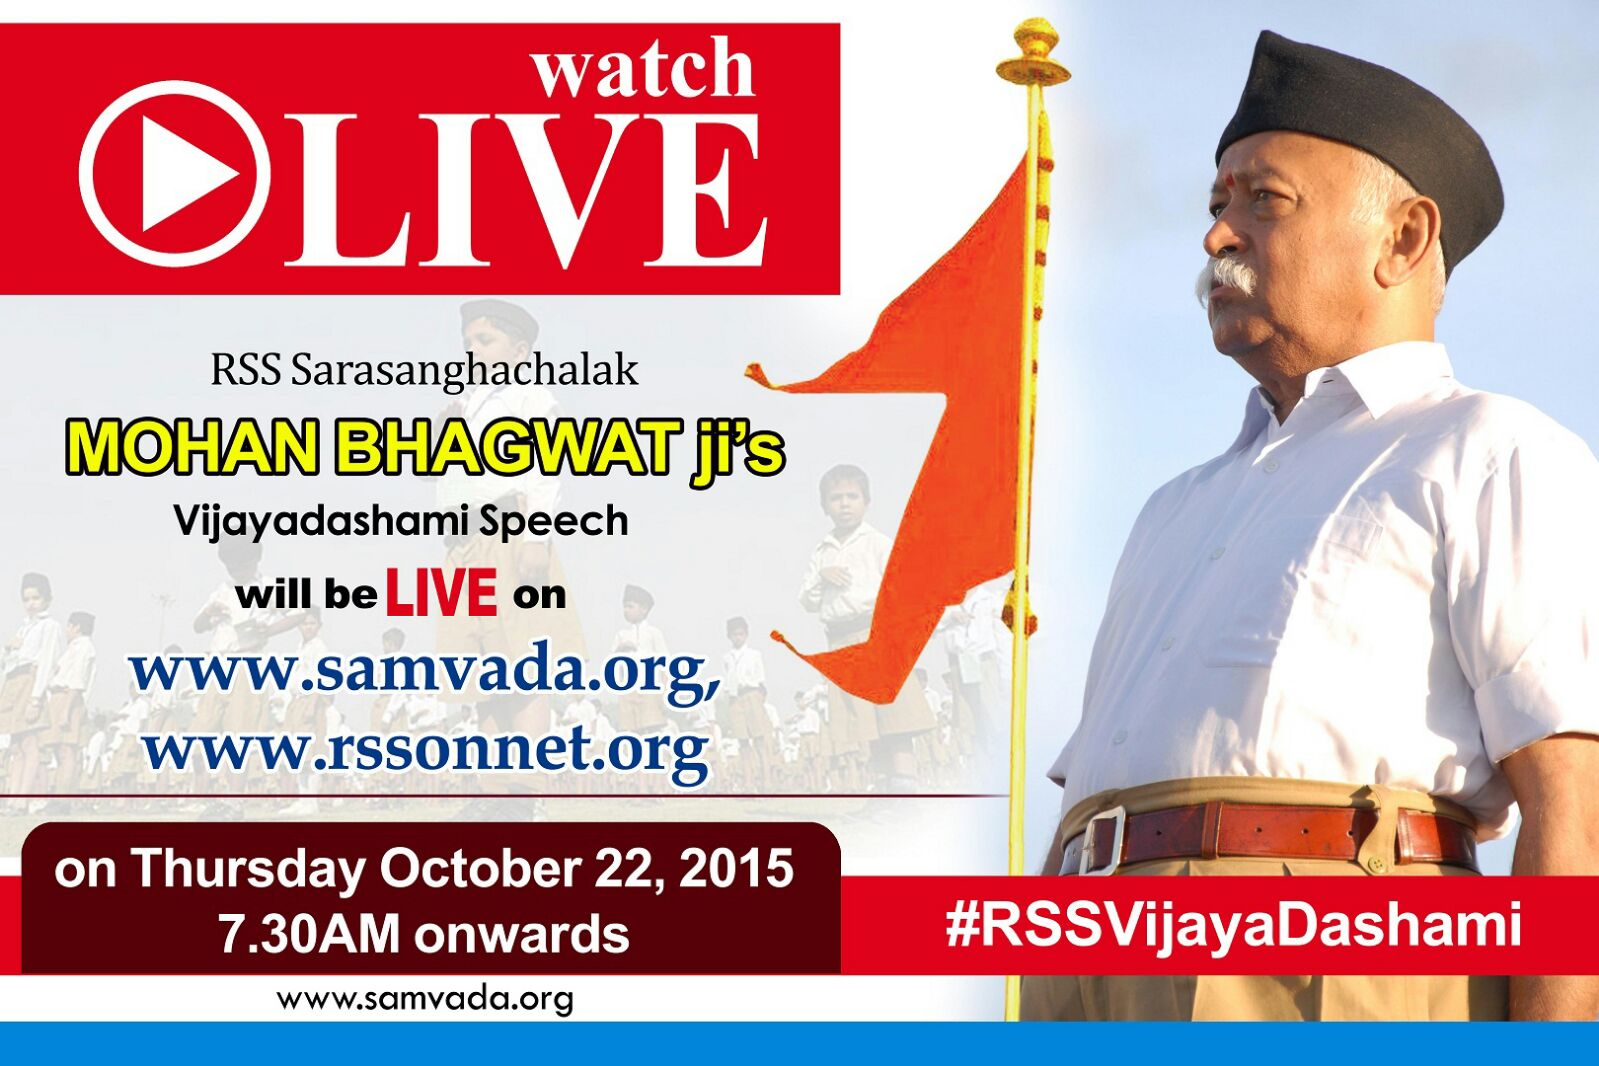 Live :: RSS Sarasanghachalak Mohan Bhagwat’s #RSSVijayaDashami speech